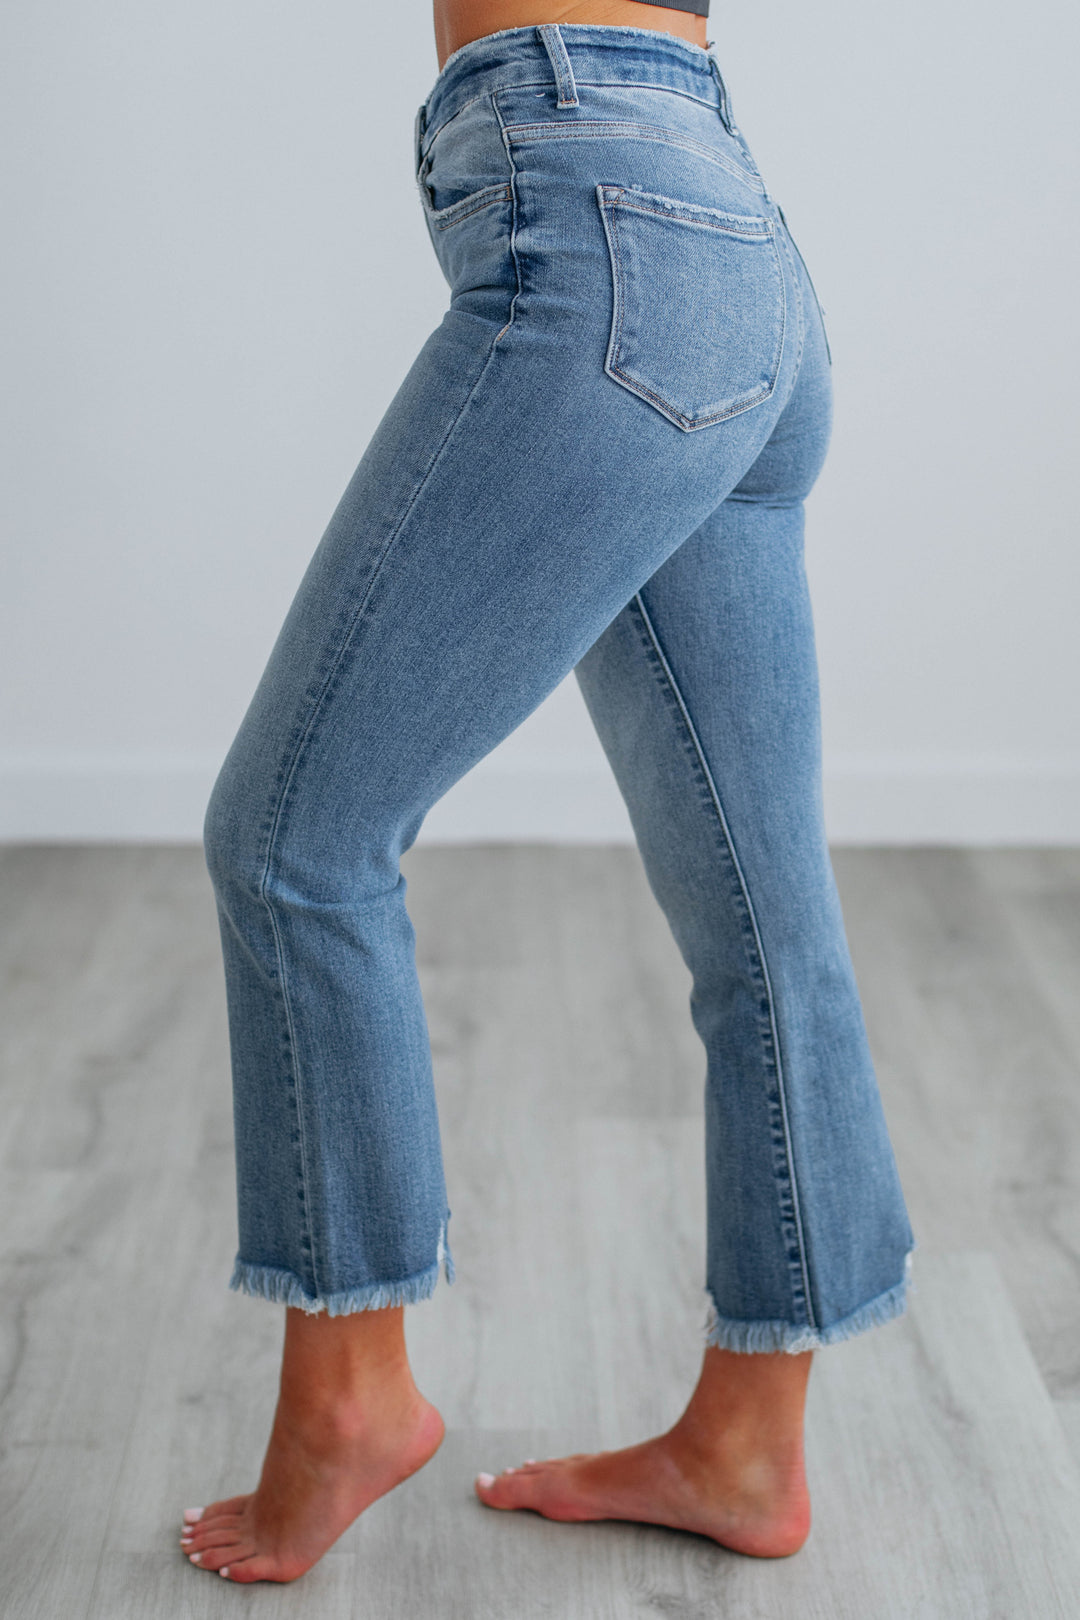 Bella Vervet Jeans - Medium Wash